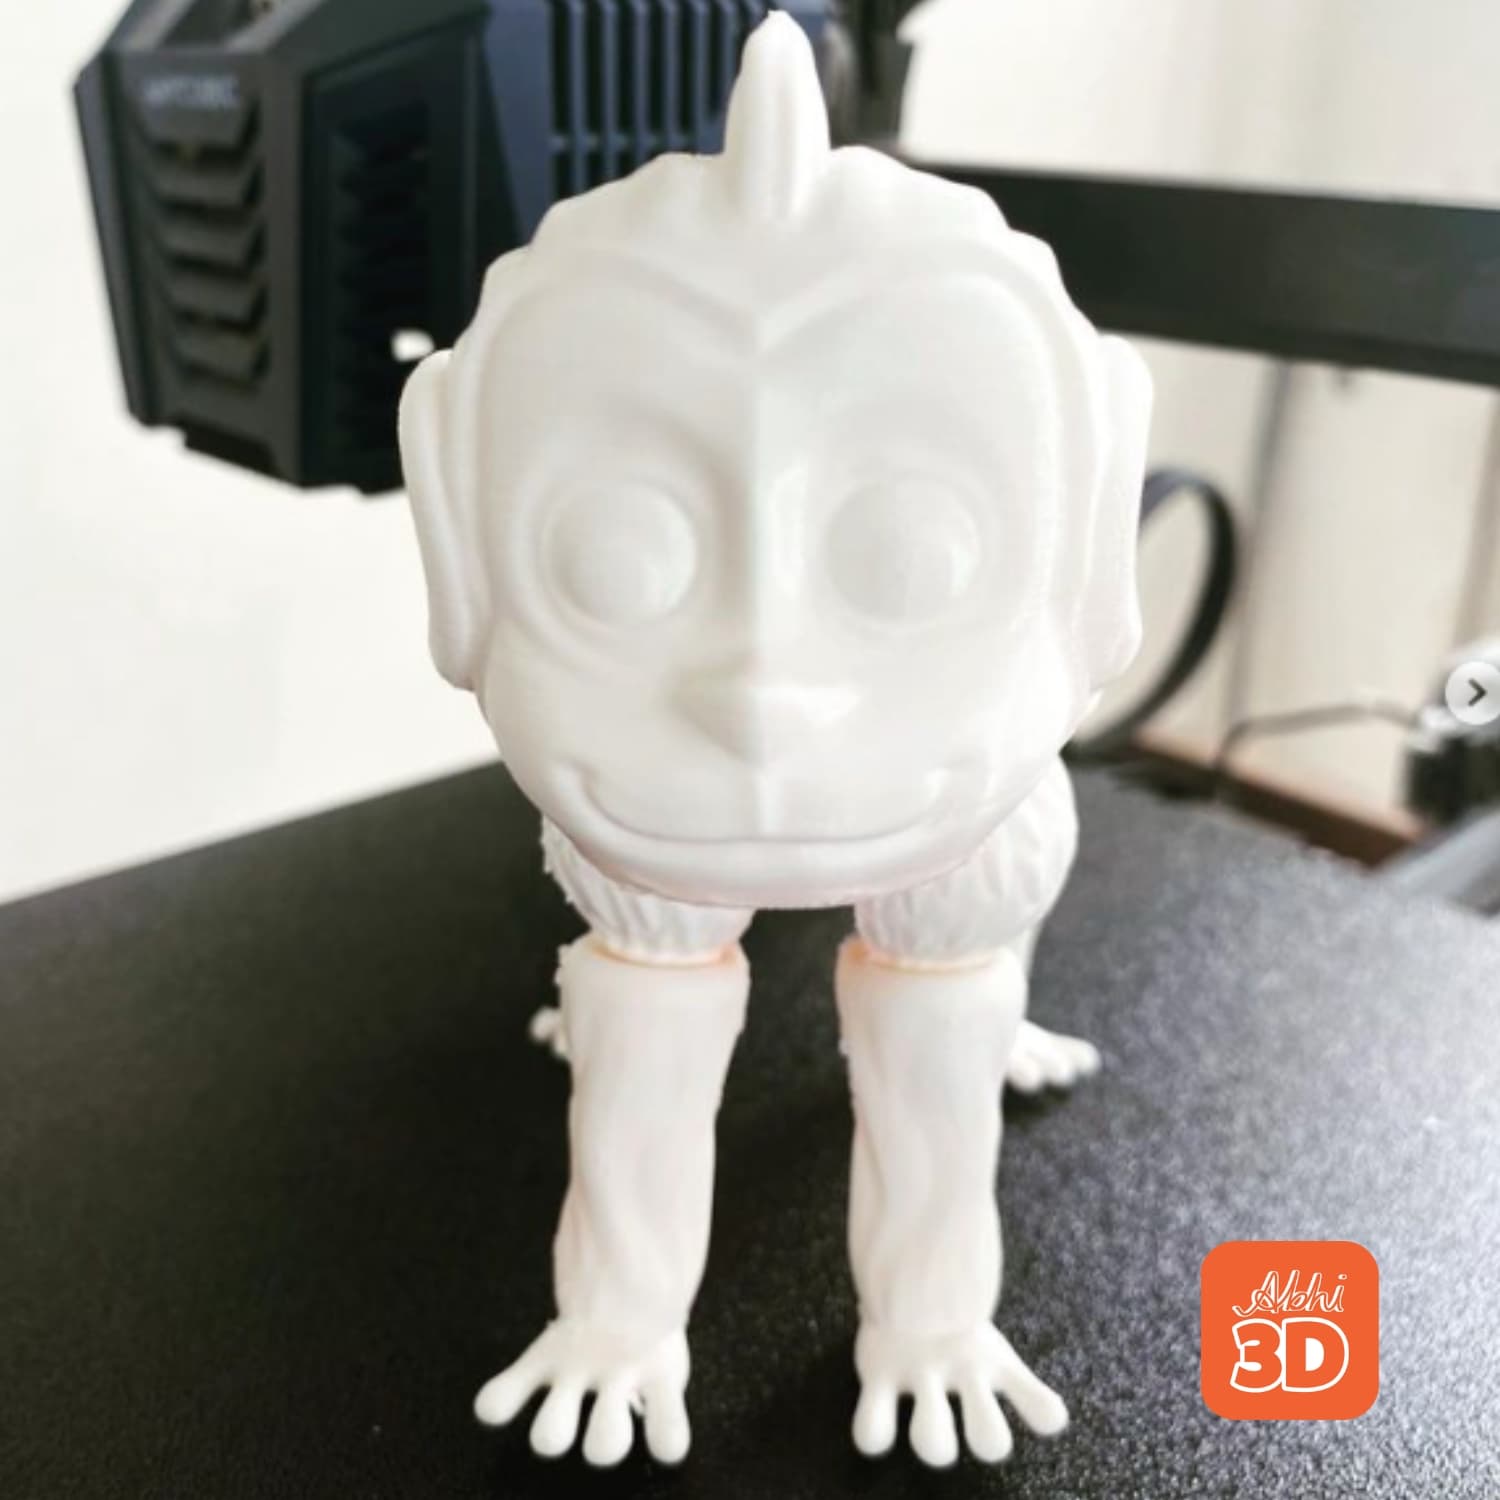 Monkey STL File For 3D Printing